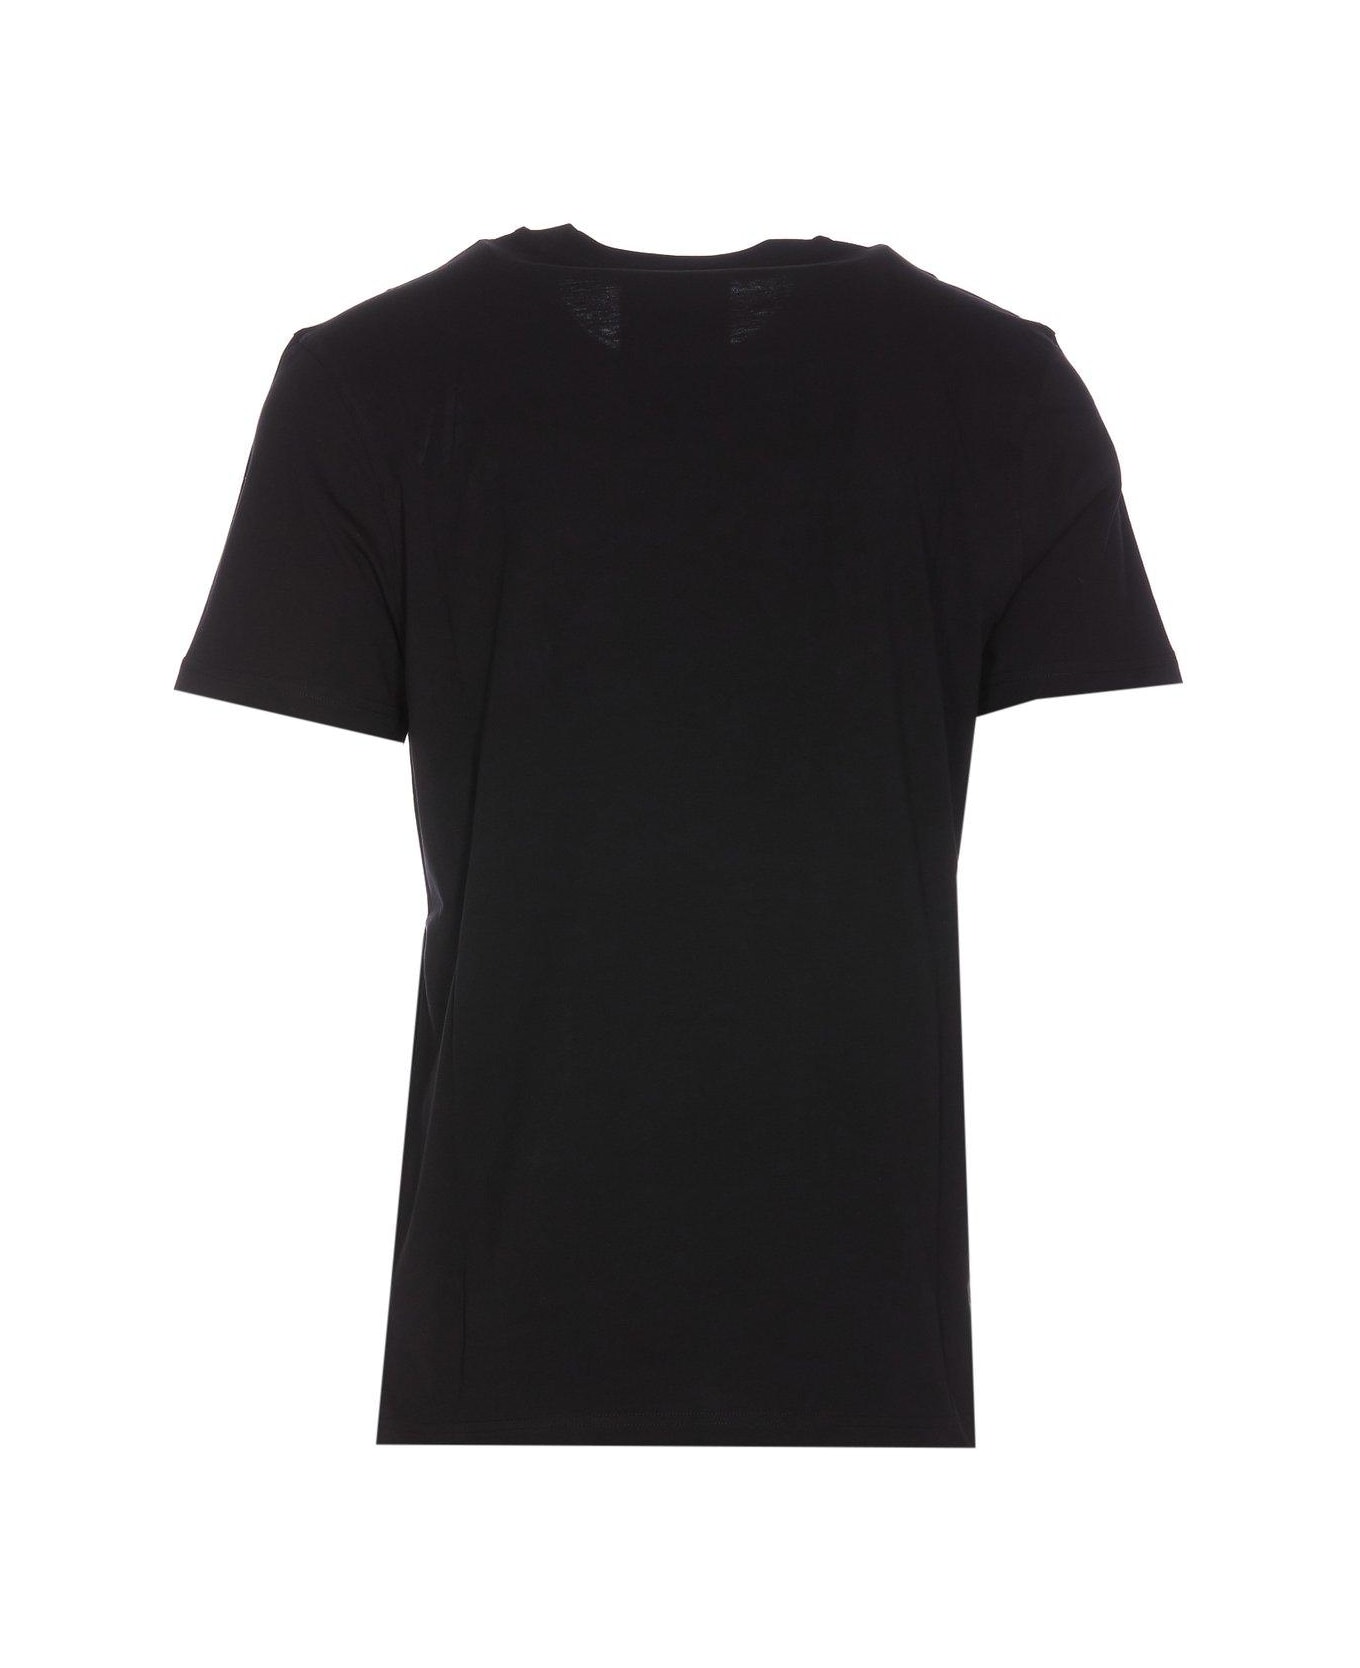 Moschino Logo Printed Crewneck T-shirt - Black